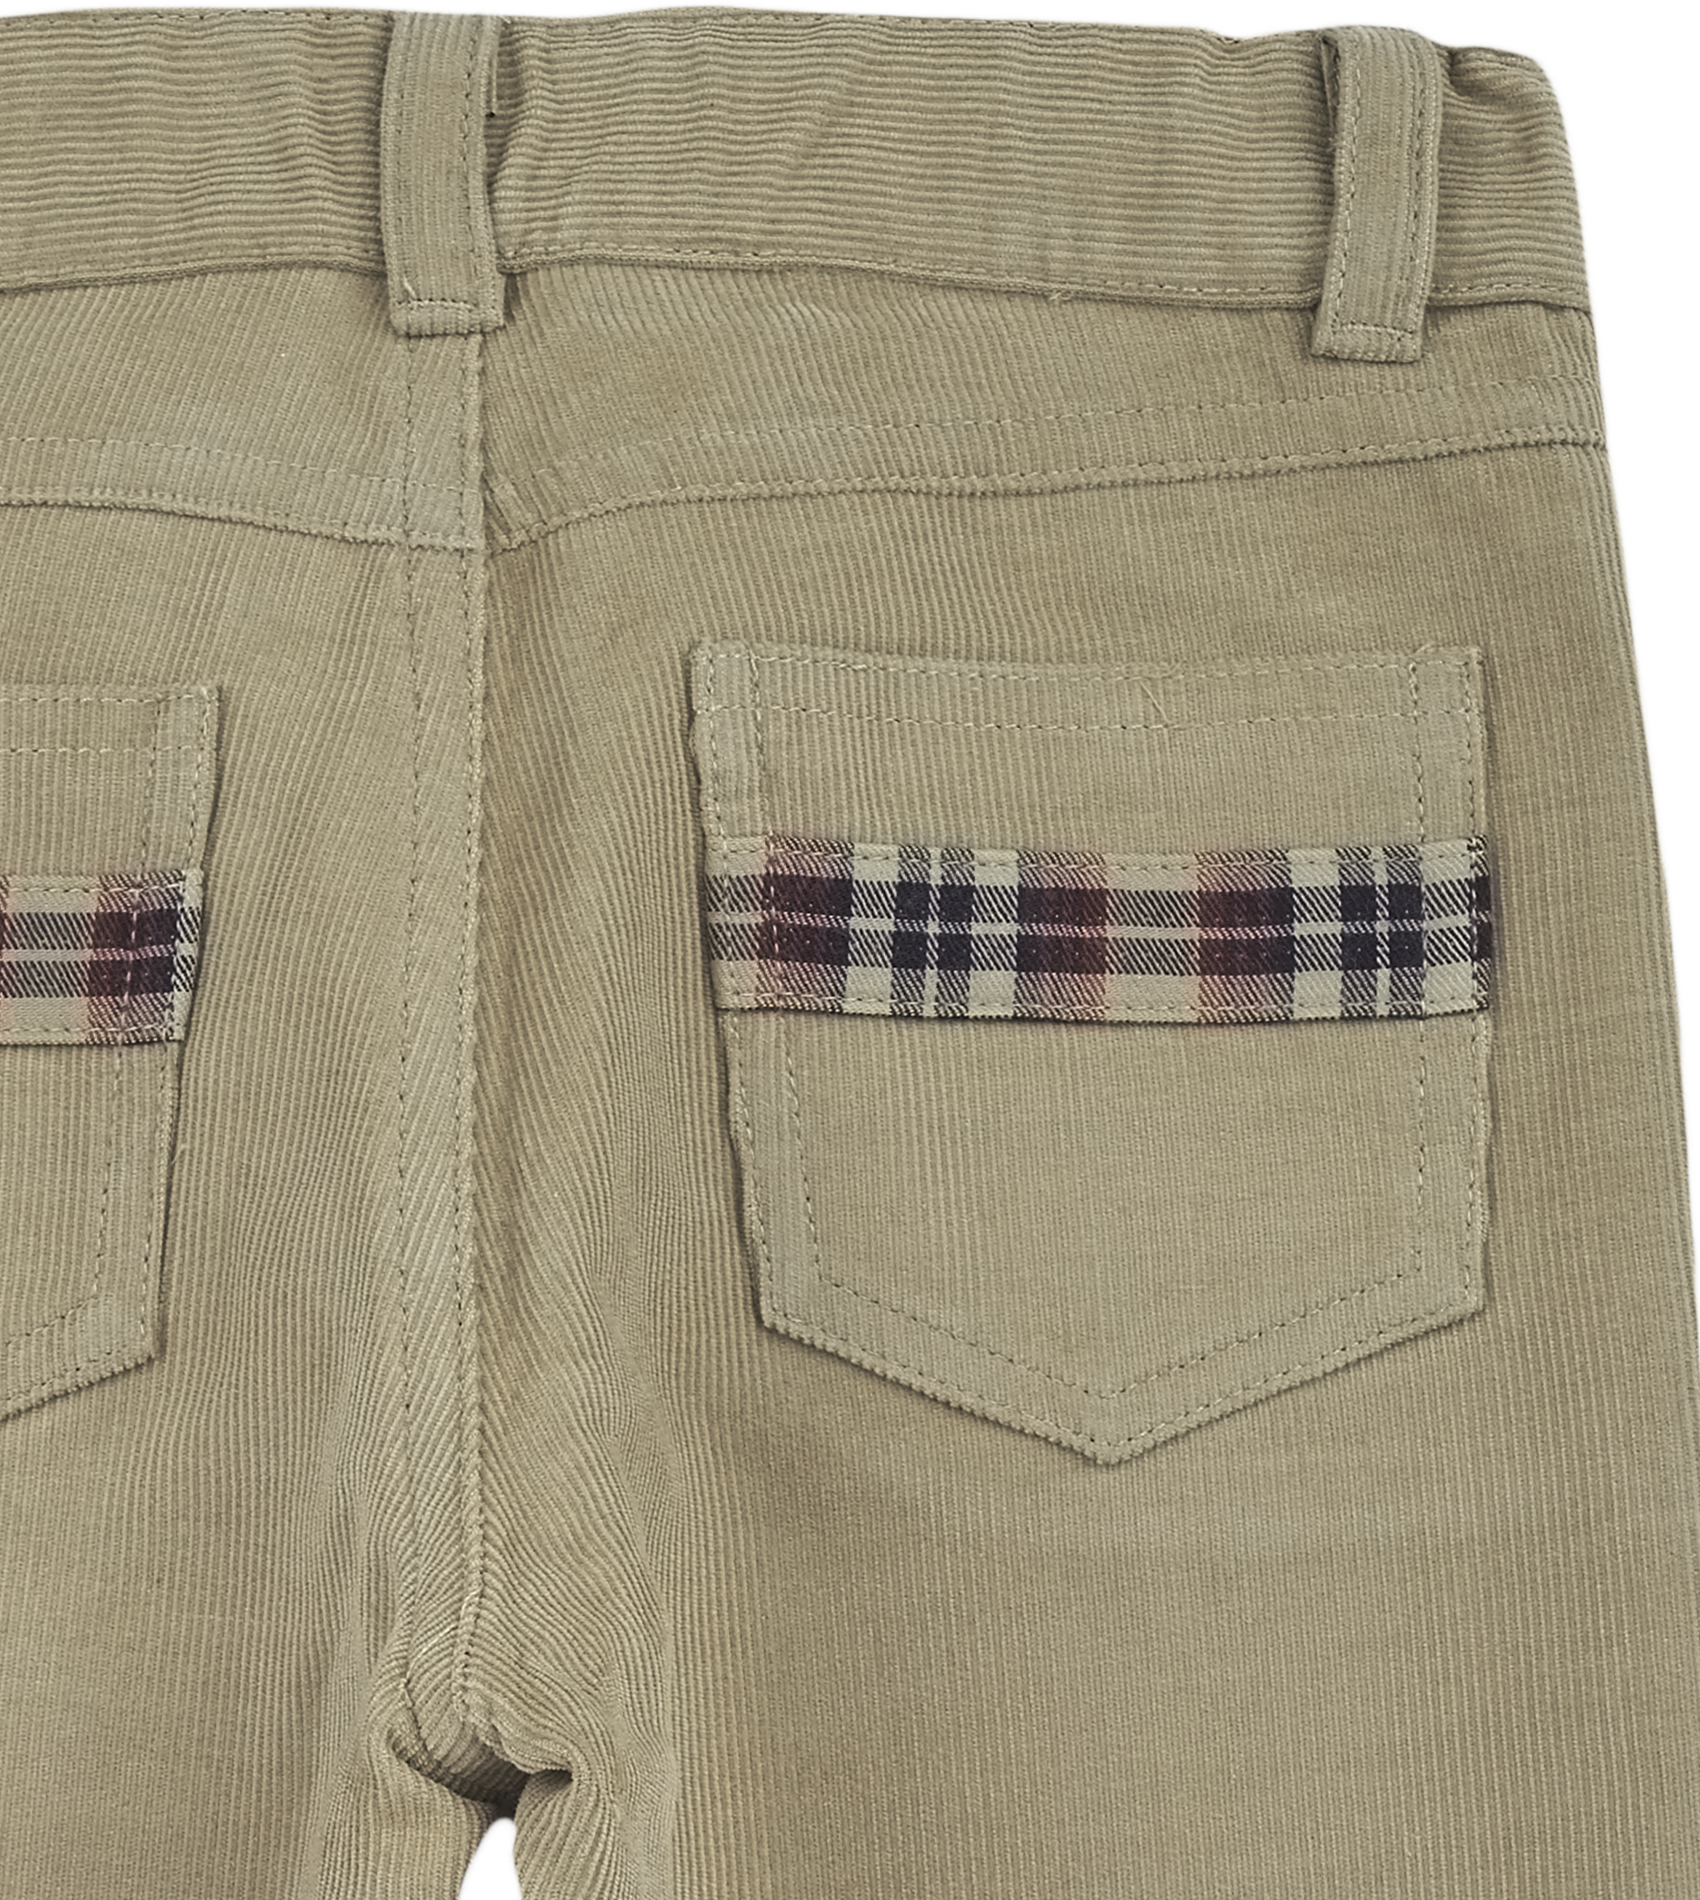 Ex MampS Men Trousers Straight Leg Cotton Corduroy Pants Regular Fit  Marks Spencer  eBay